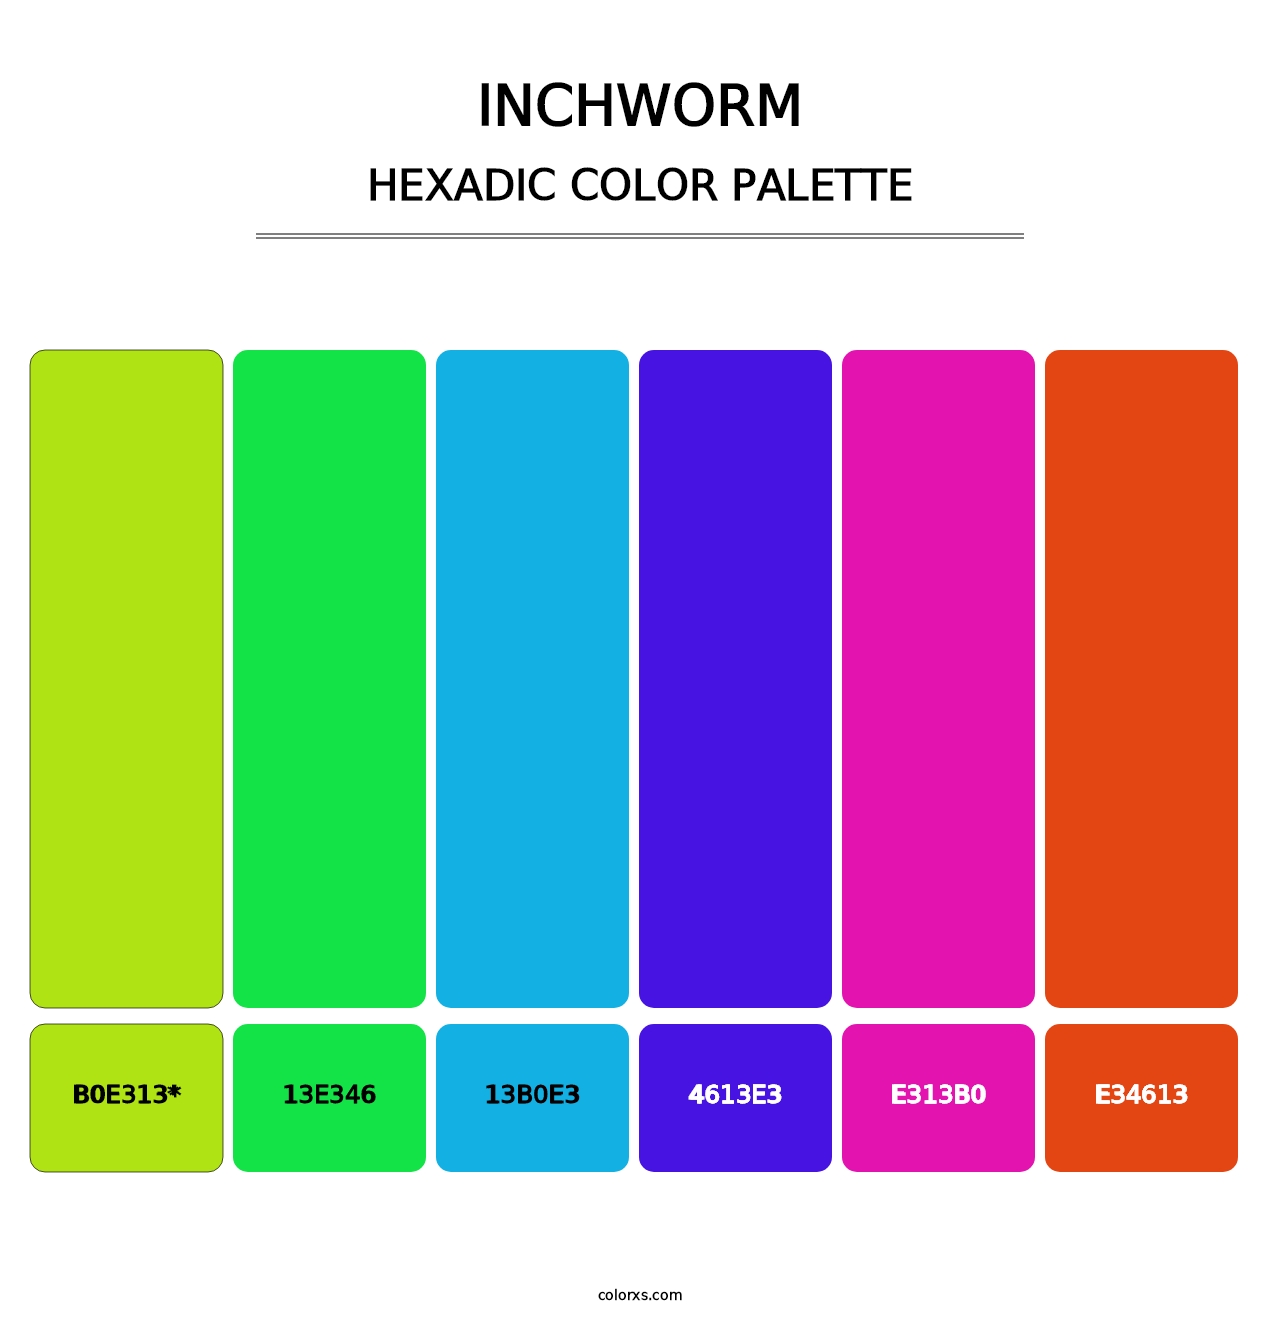 Inchworm - Hexadic Color Palette